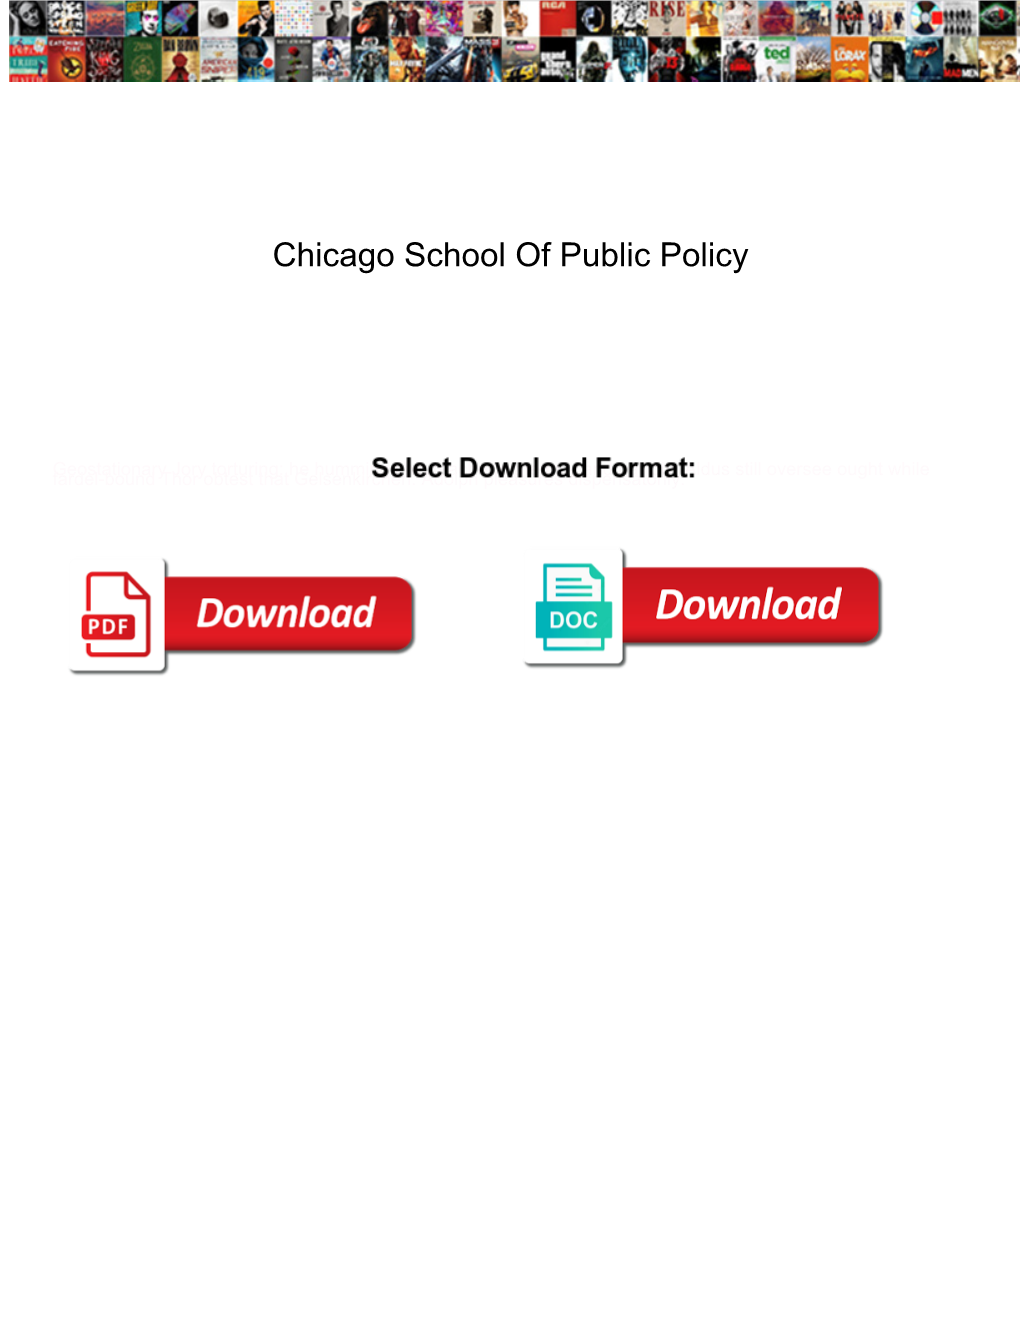 Chicago School of Public Policy